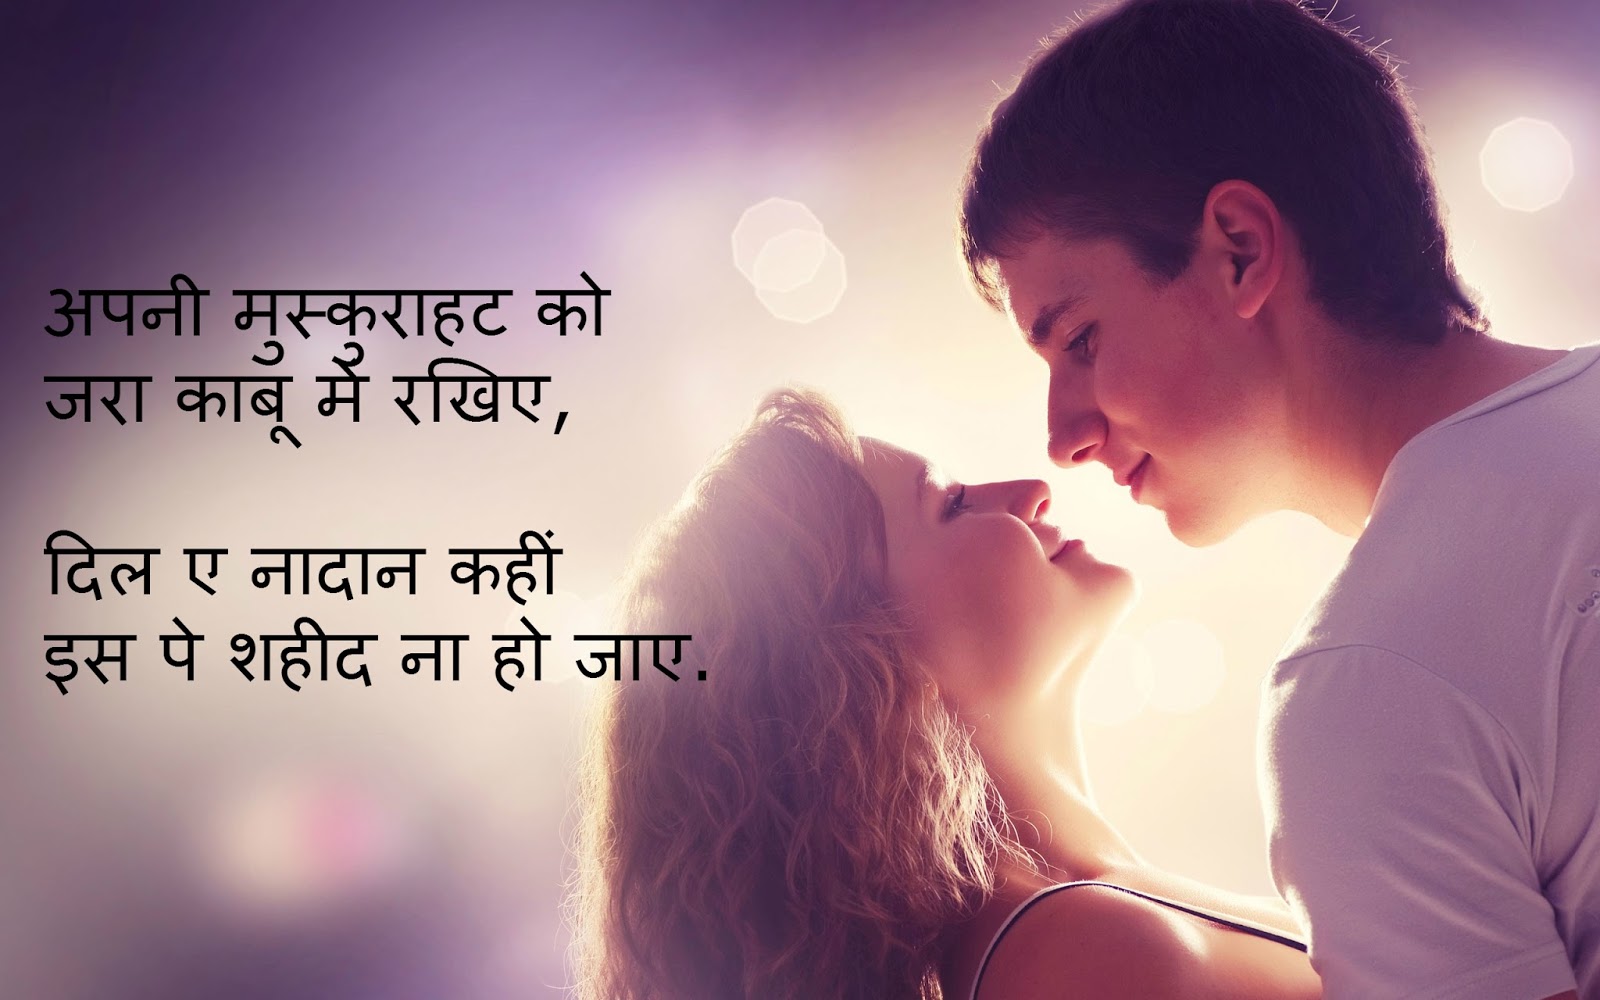 Hindi Status And Shayari: Top 10 Best Hindi Love Status